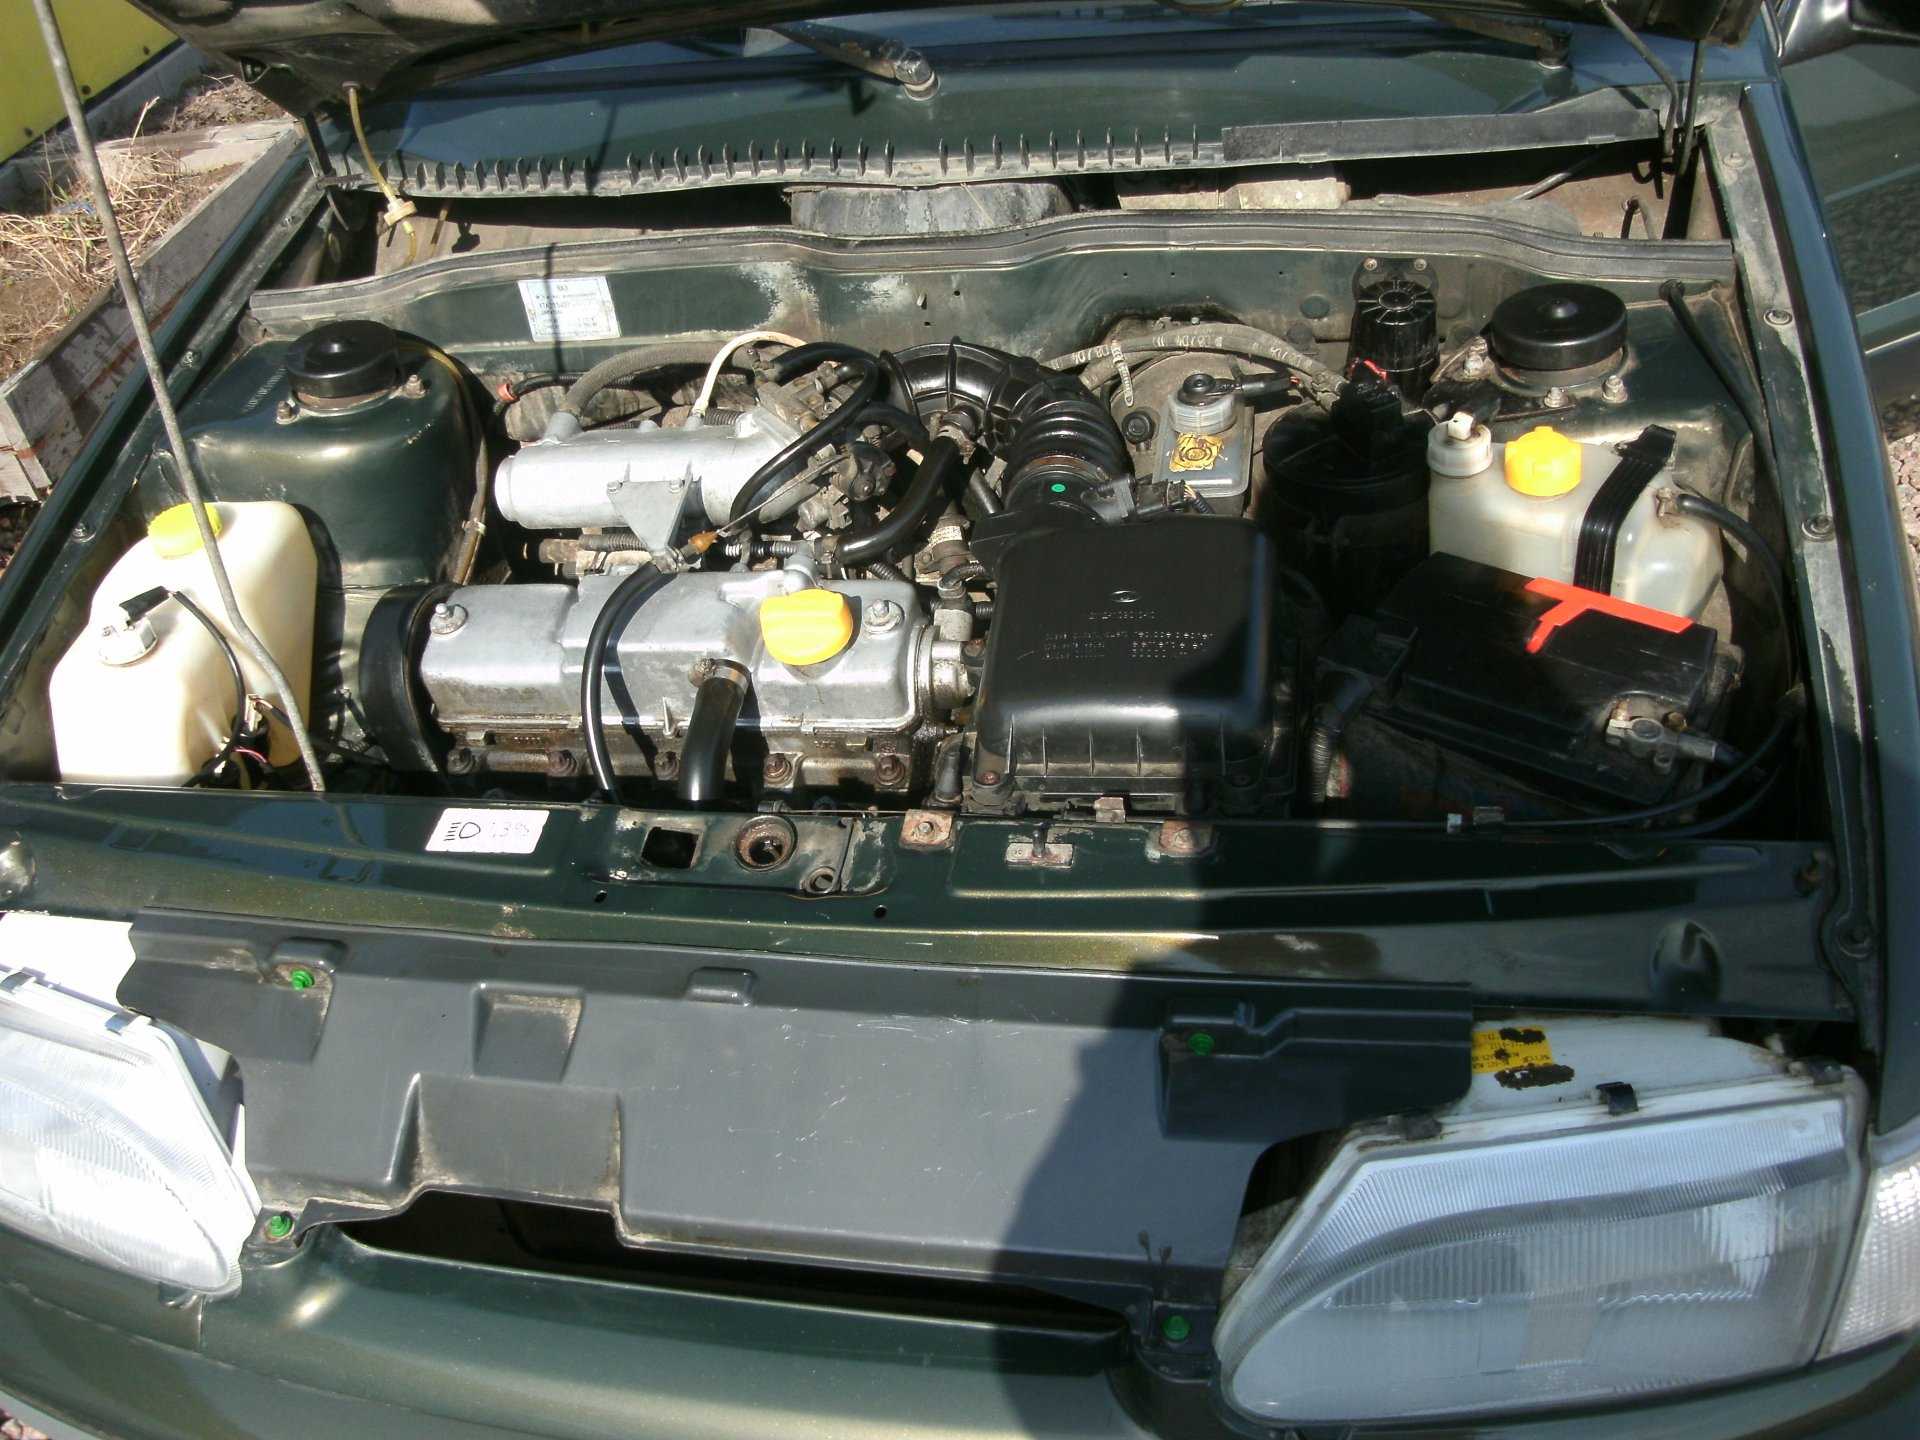 Характеристики моторов 2114